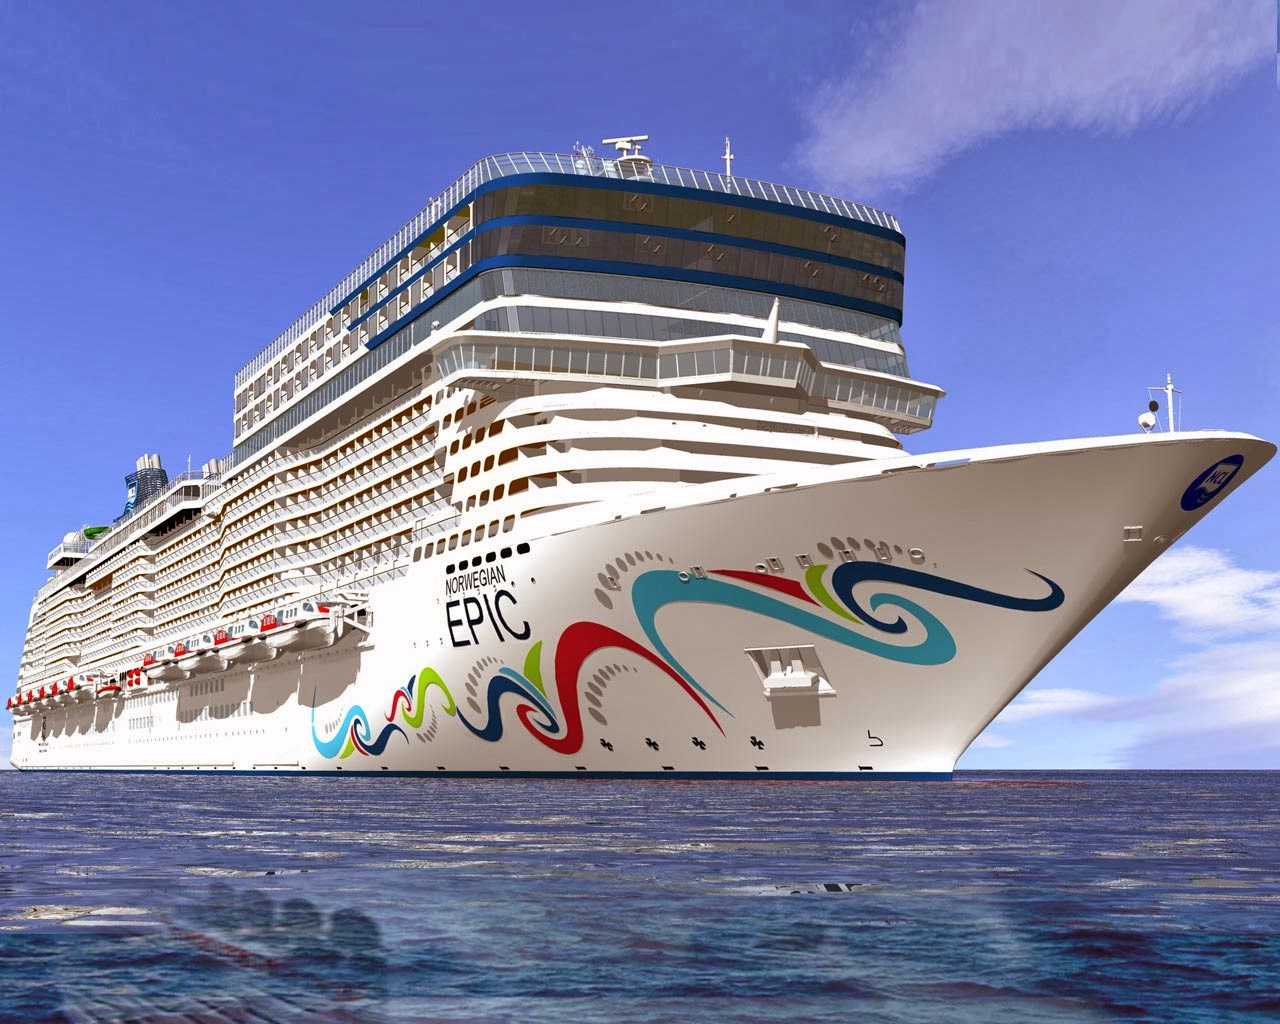 Florida Cruise Traveler Navy Norwegian Epic to Europe. And that